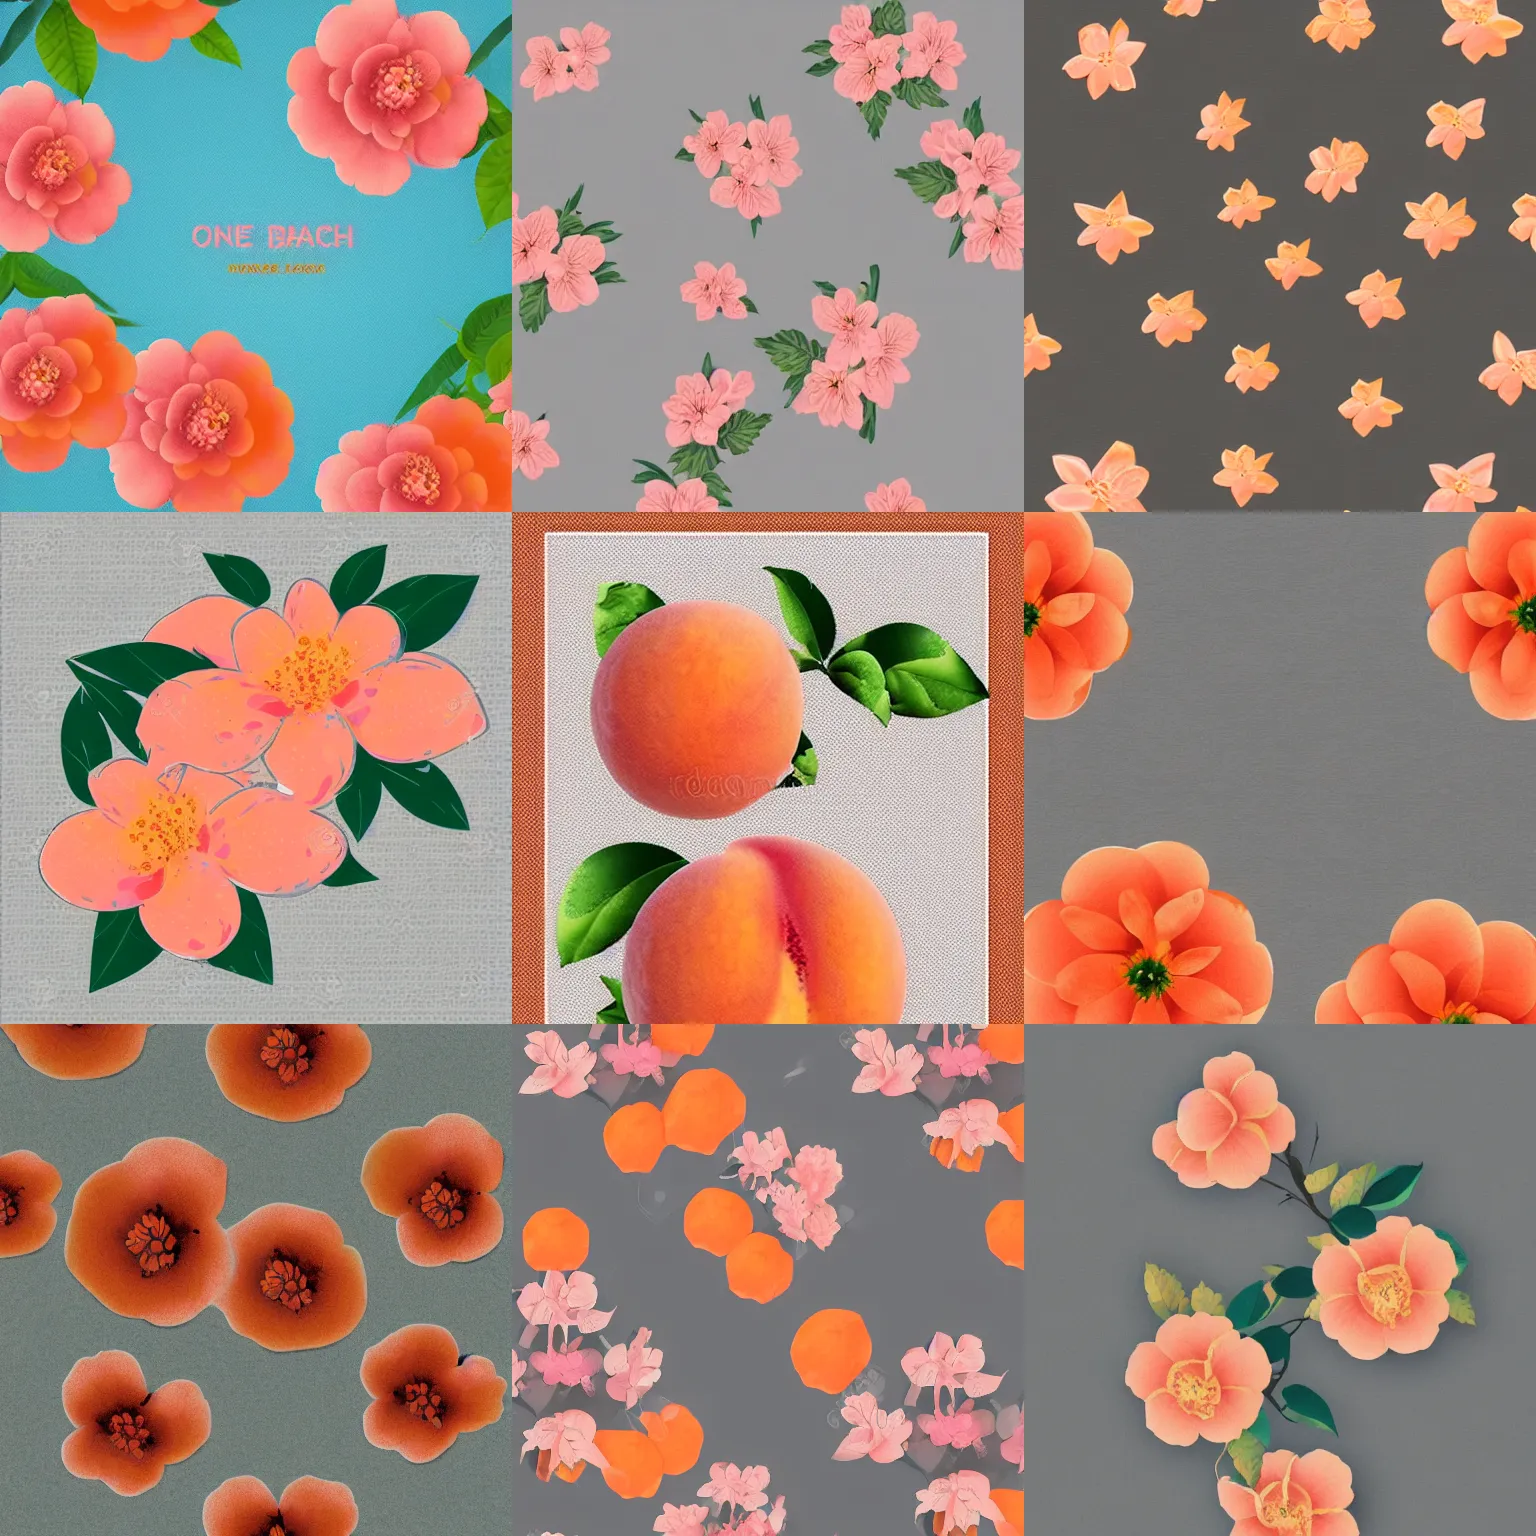 Prompt: one large colorful orange peach and pink blossoms illustration, vintage color halftone advertisement, nostalgic high saturation, solid light grey background